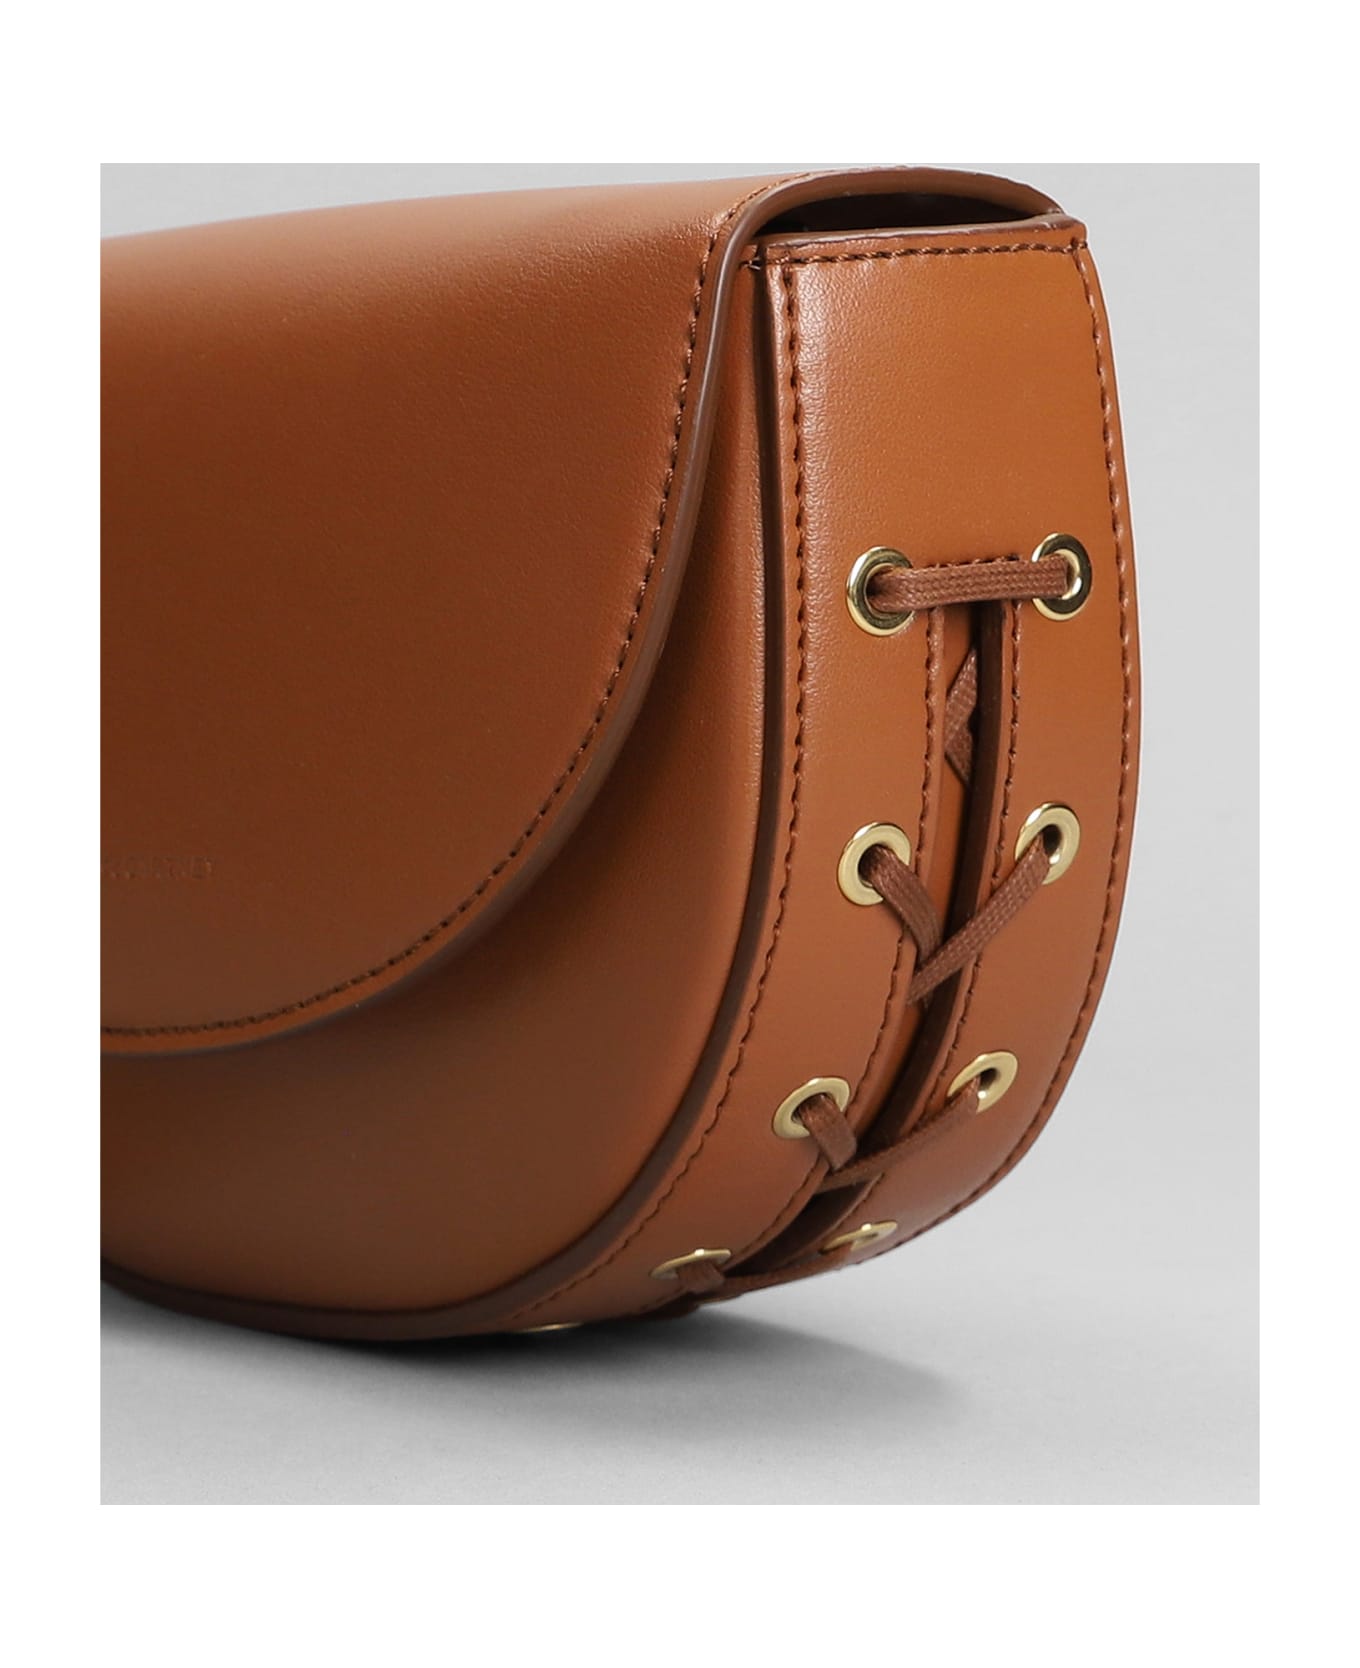 Stella McCartney Shoulder Bag In Brown Polyamide - brown